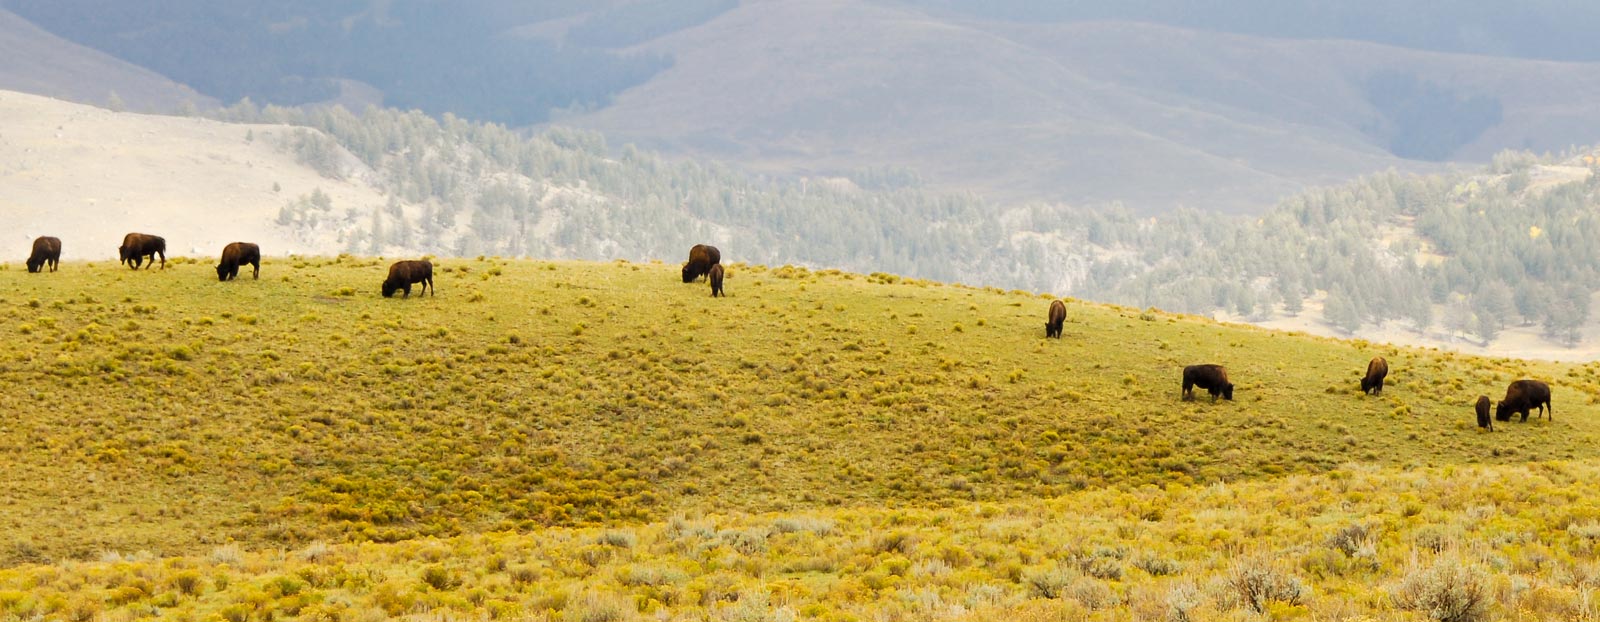 Natural habitat of bison grass